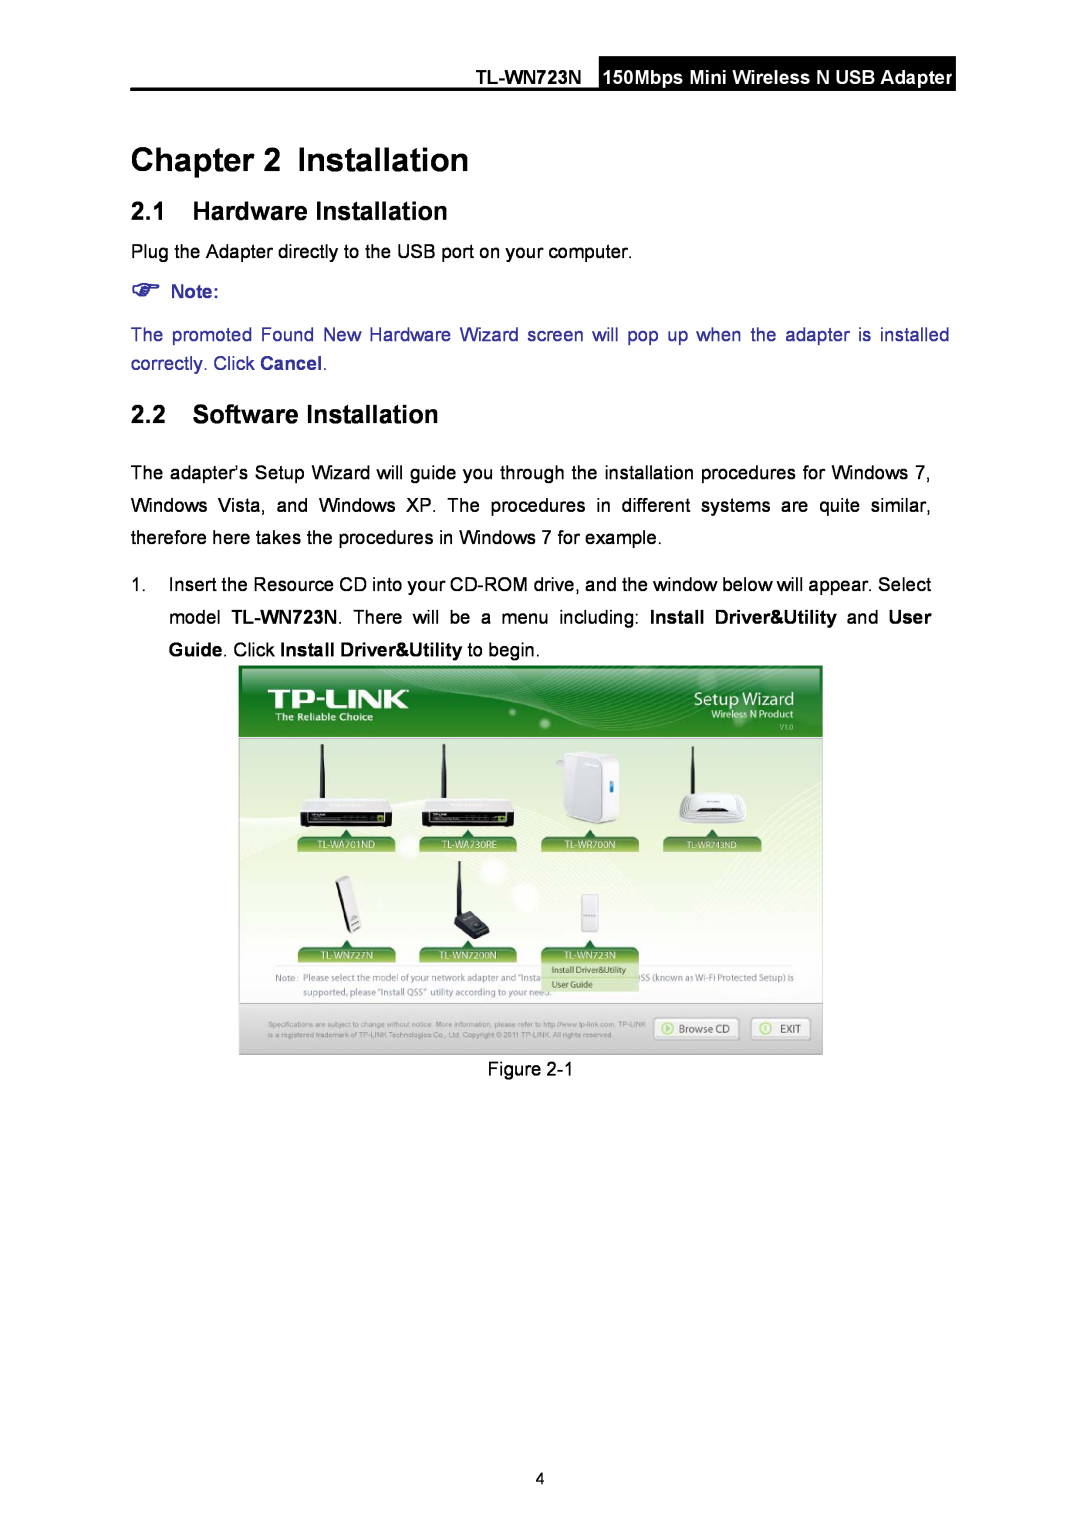 TP-Link manual Hardware Installation, Software Installation, TL-WN723N 150Mbps Mini Wireless N USB Adapter 